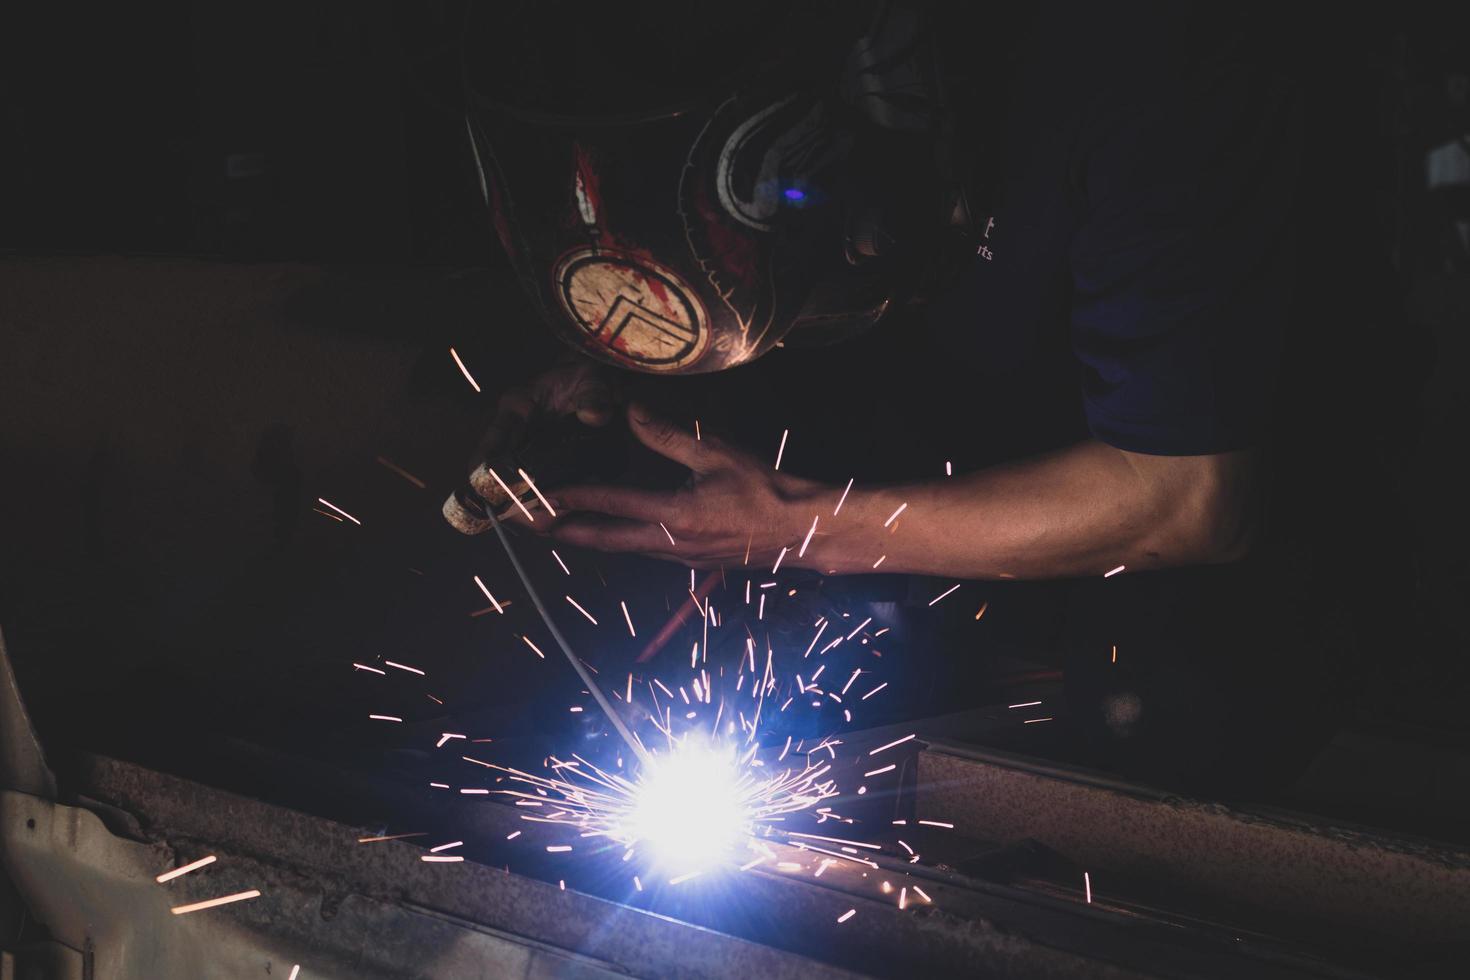 welder, welding automotive part in a car factory photo